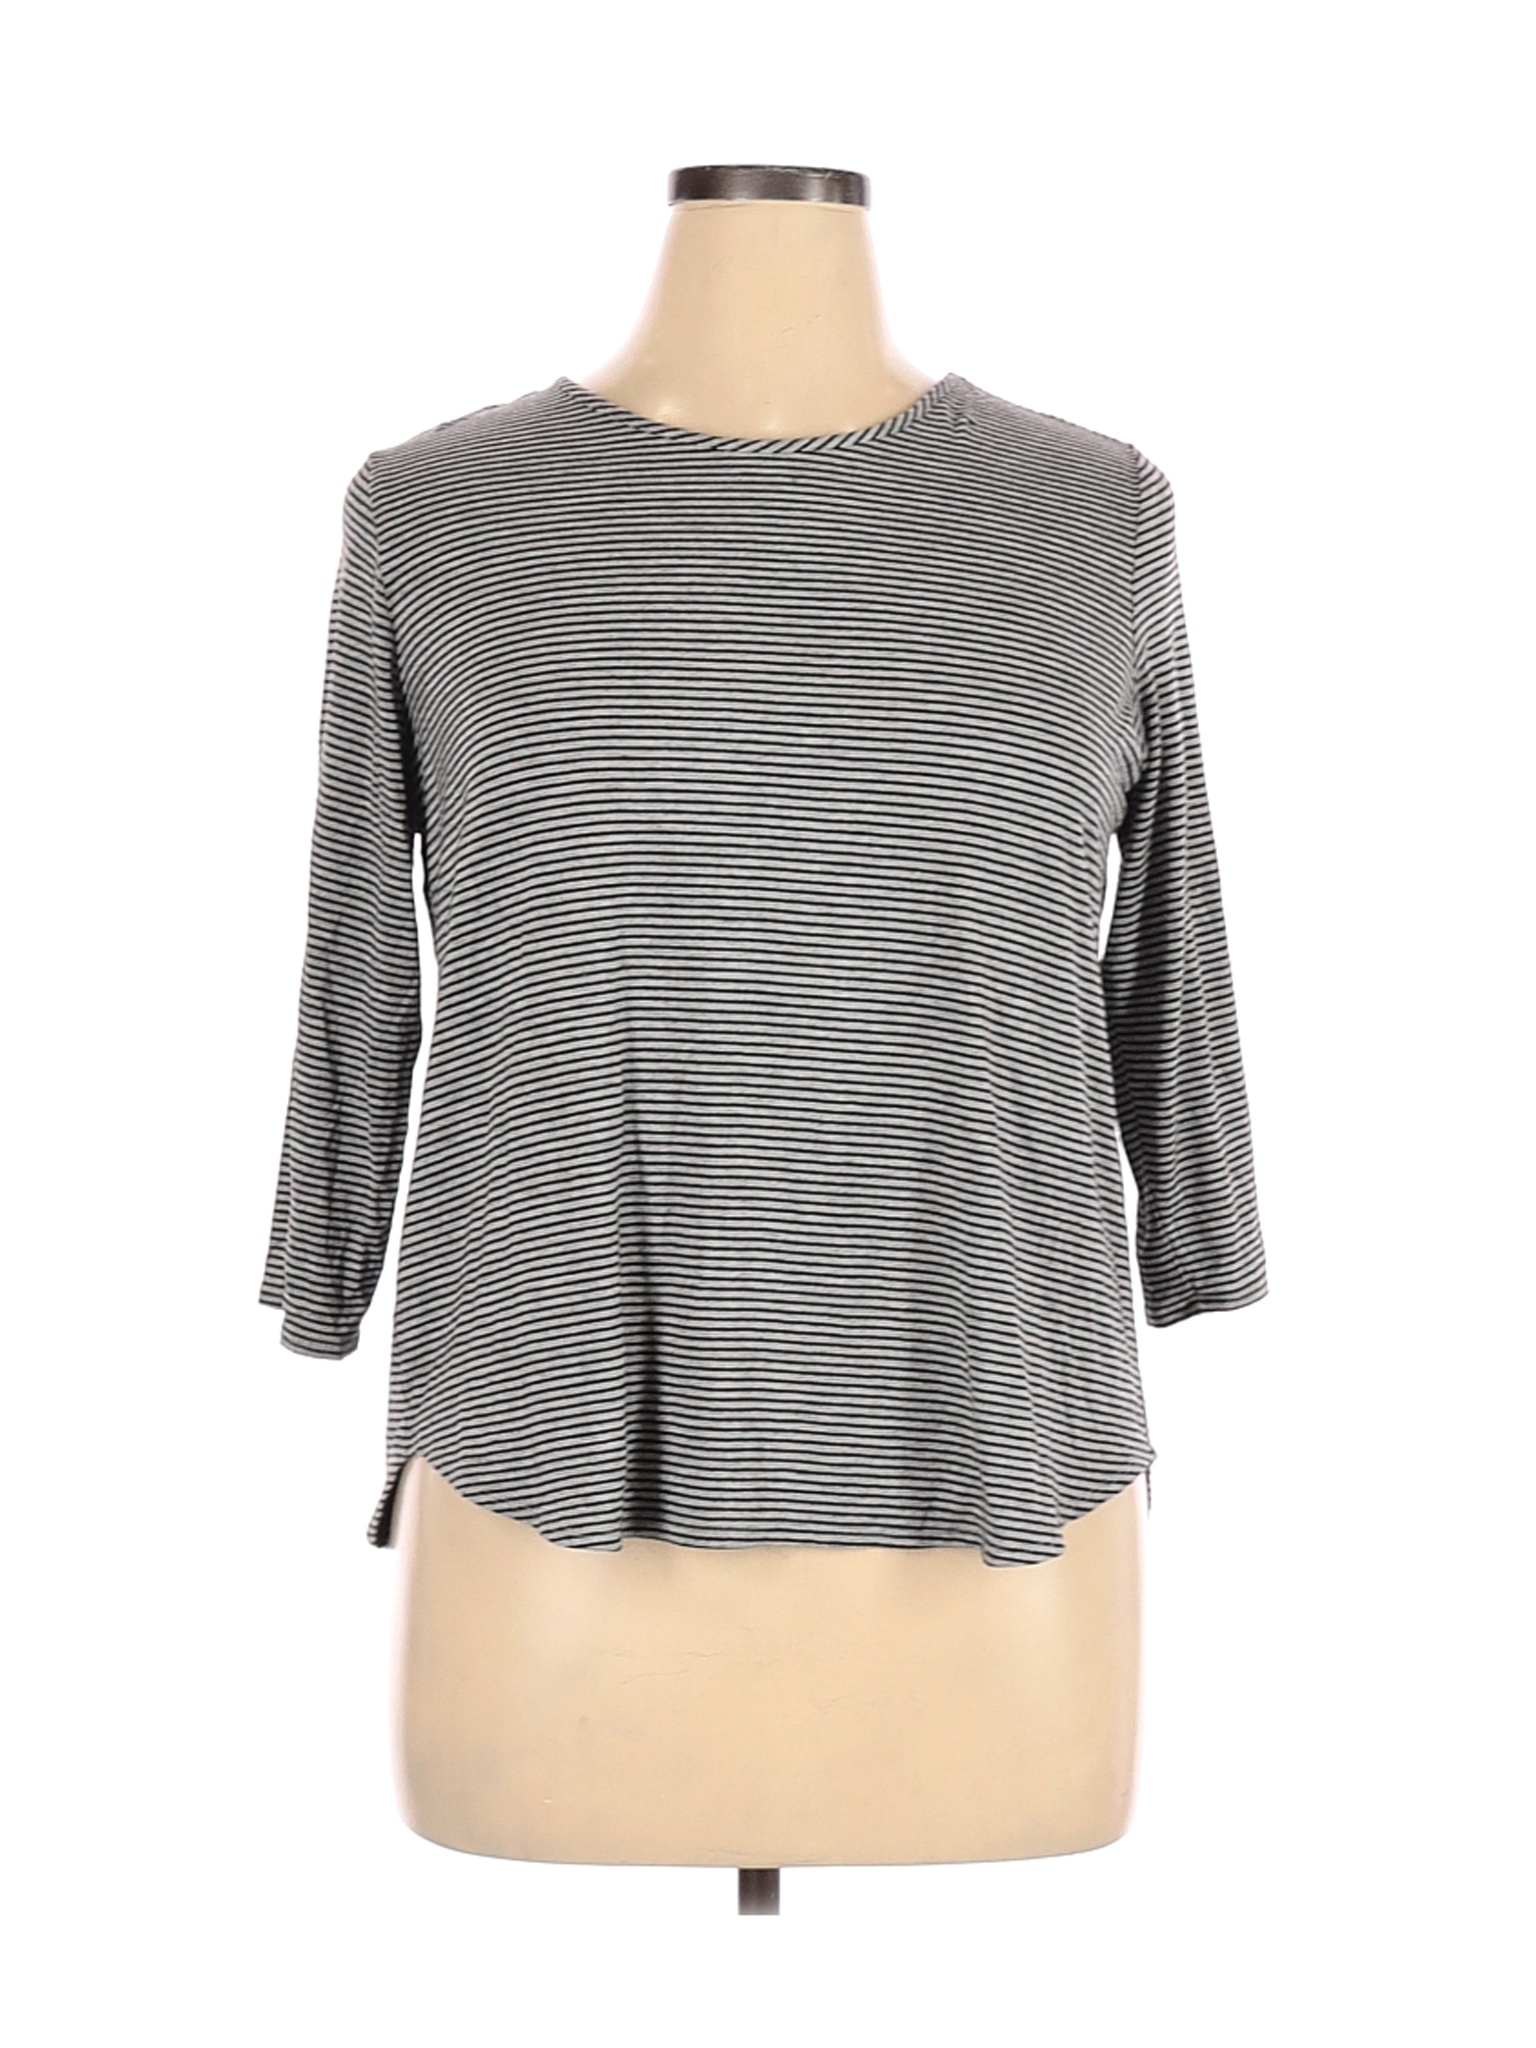 Workshop Republic Clothing Women Gray Long Sleeve T-Shirt 1X Plus | eBay